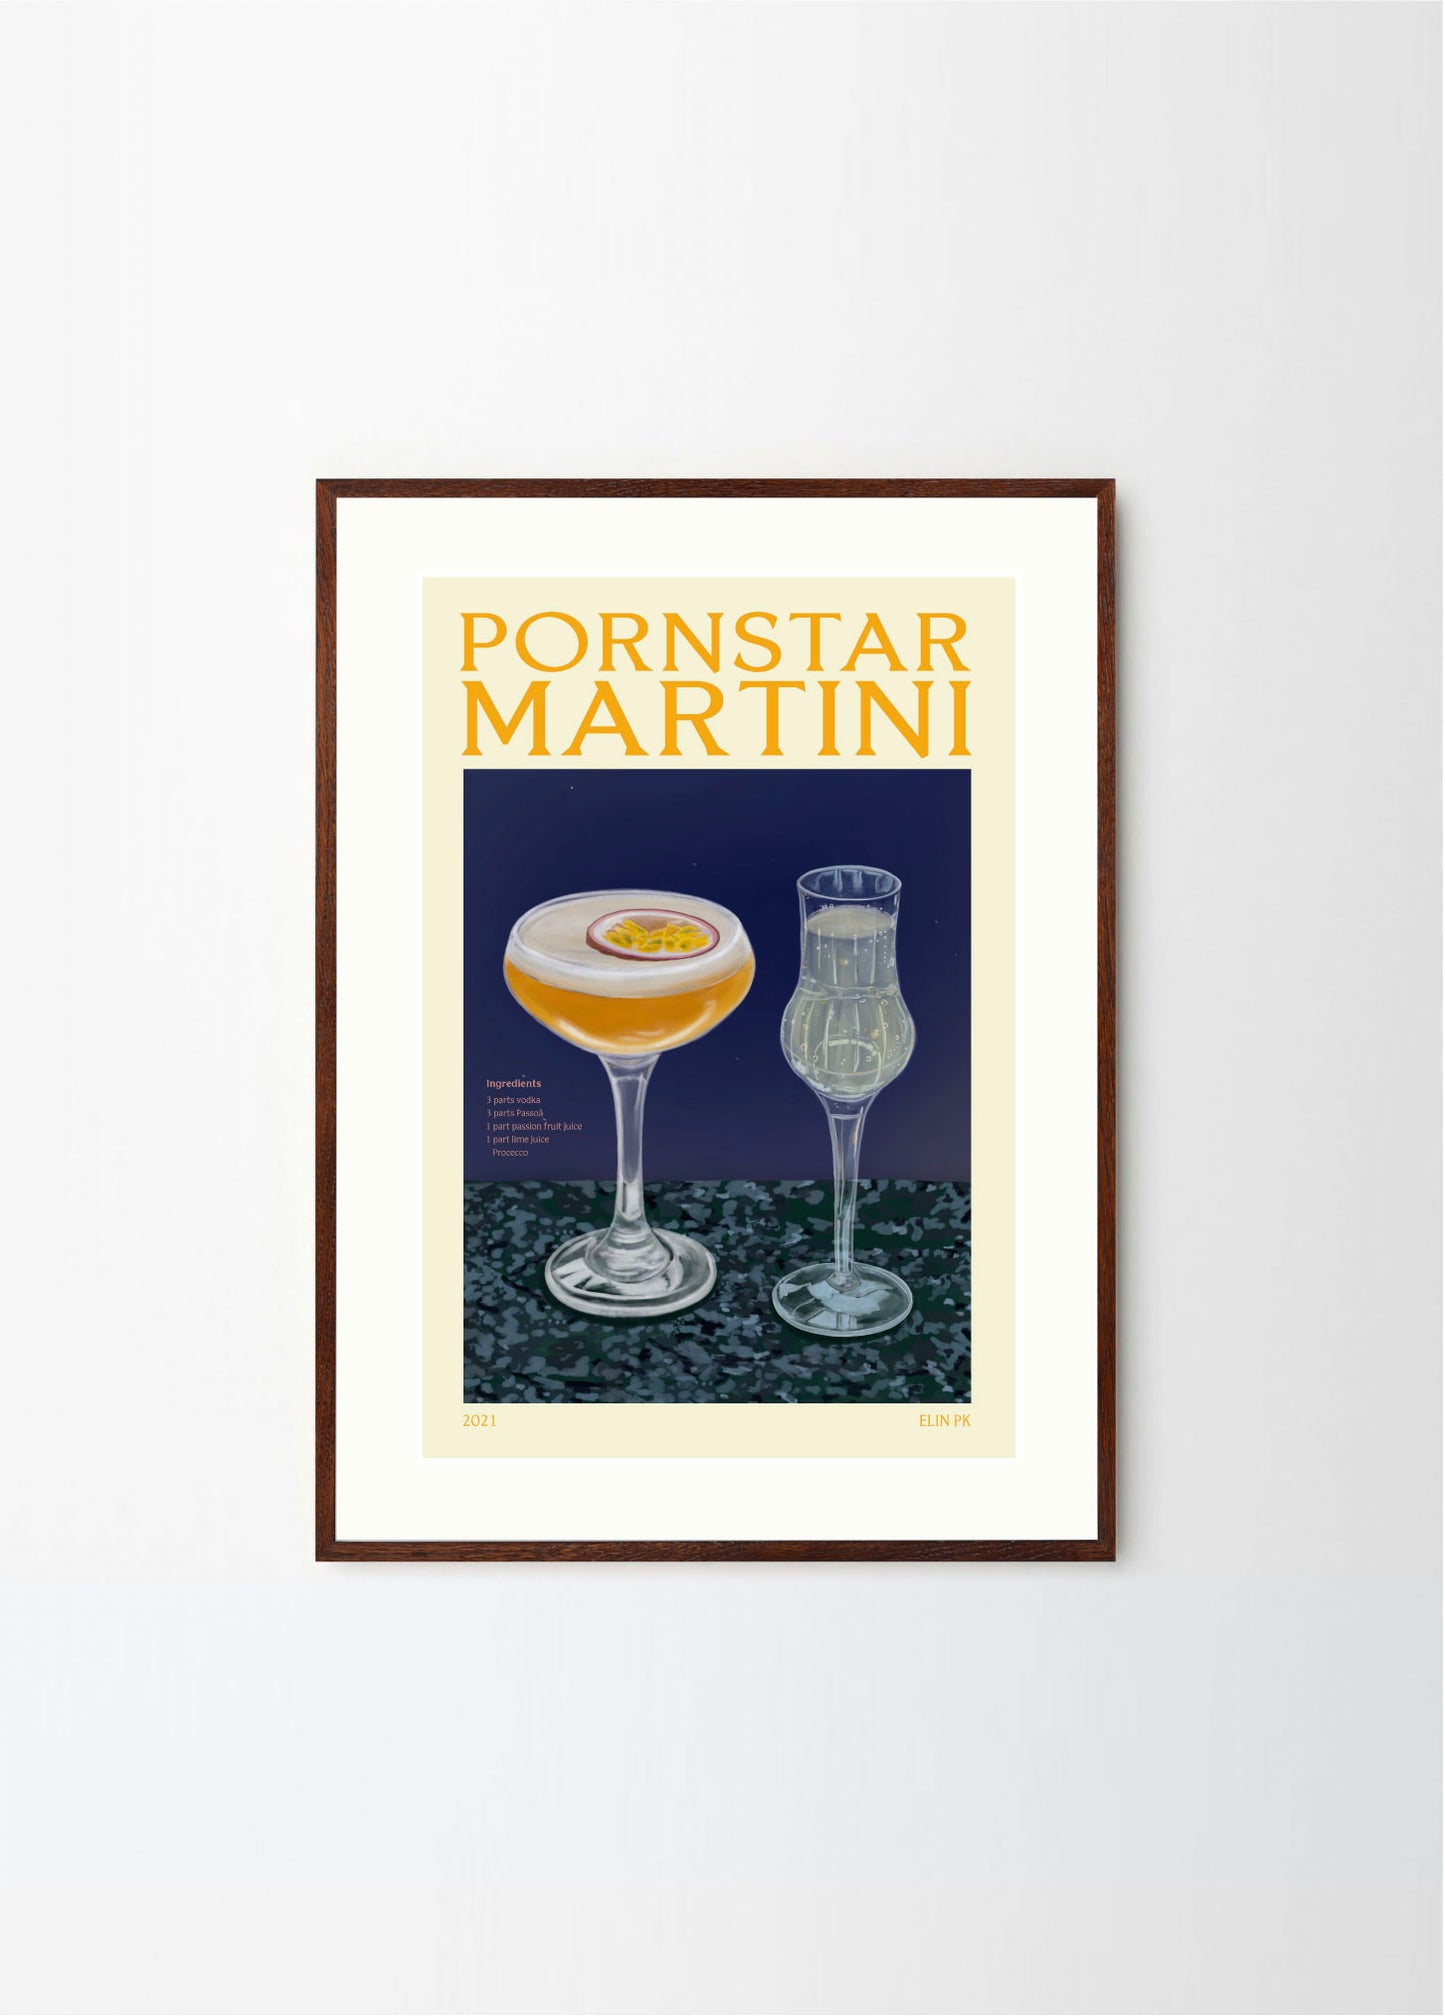 Pornstar Martini